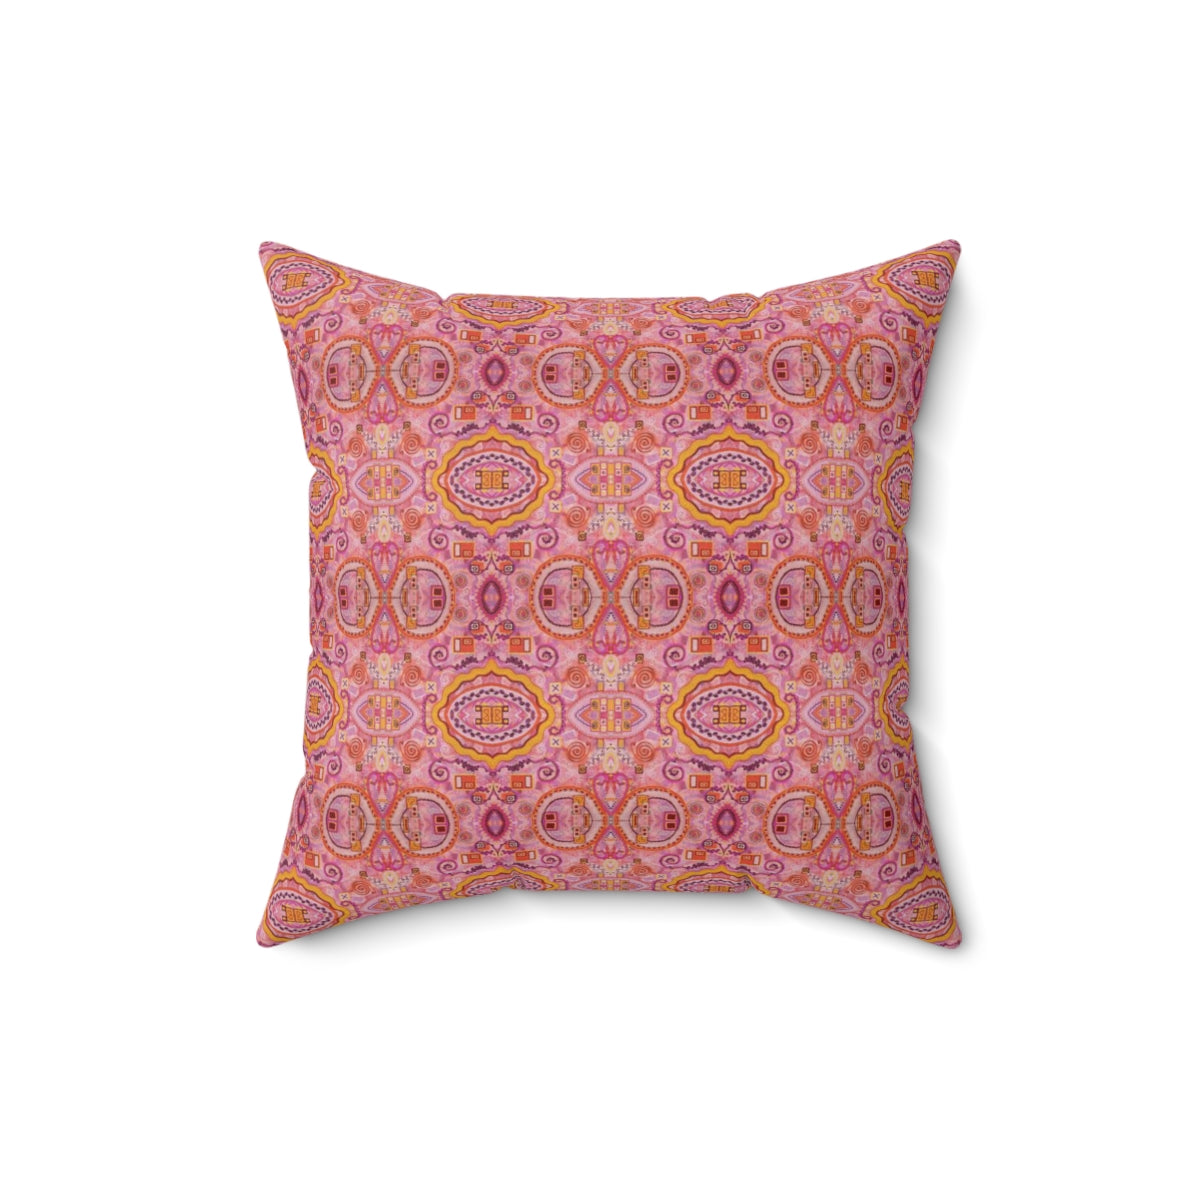 Designer Pink Throw Pillow